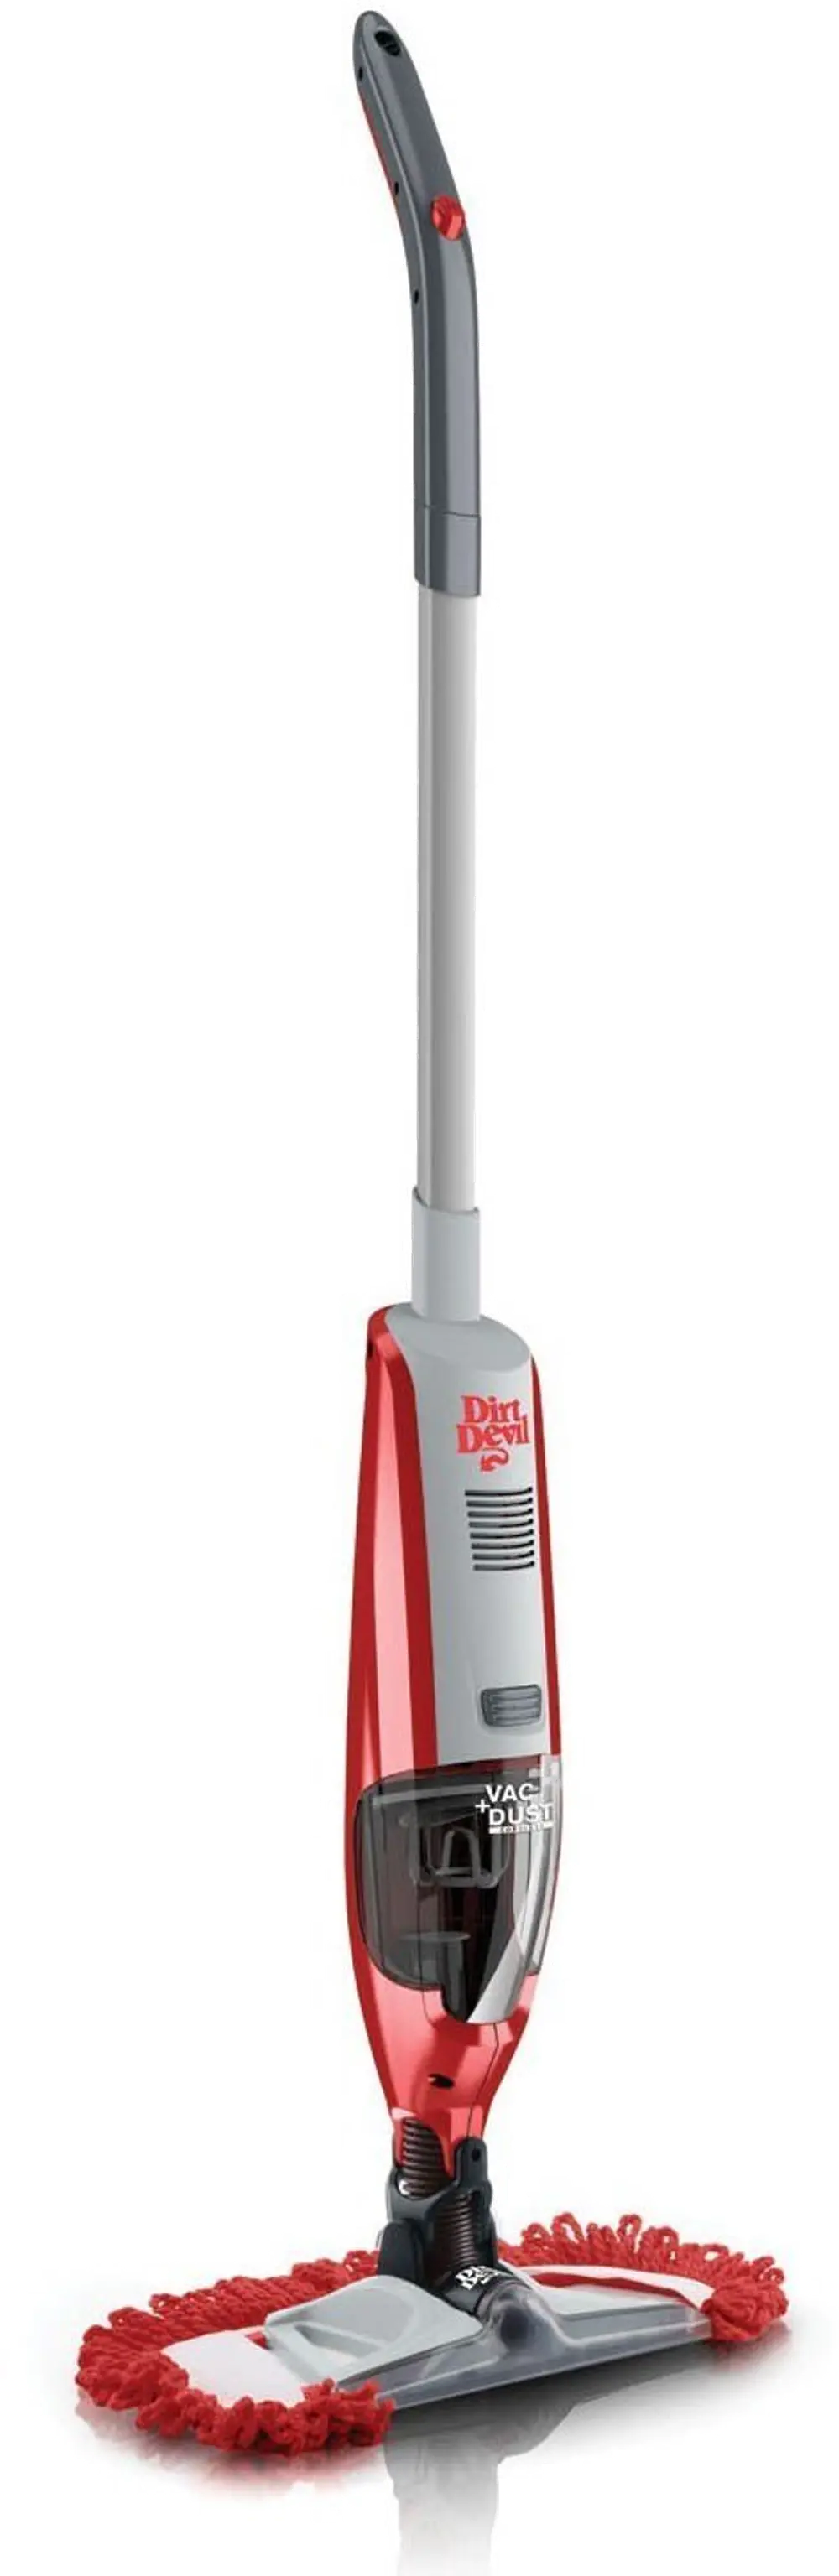 Dirt Devil Vac+Dust Cordless Stick Vacuum with SWIPES-1